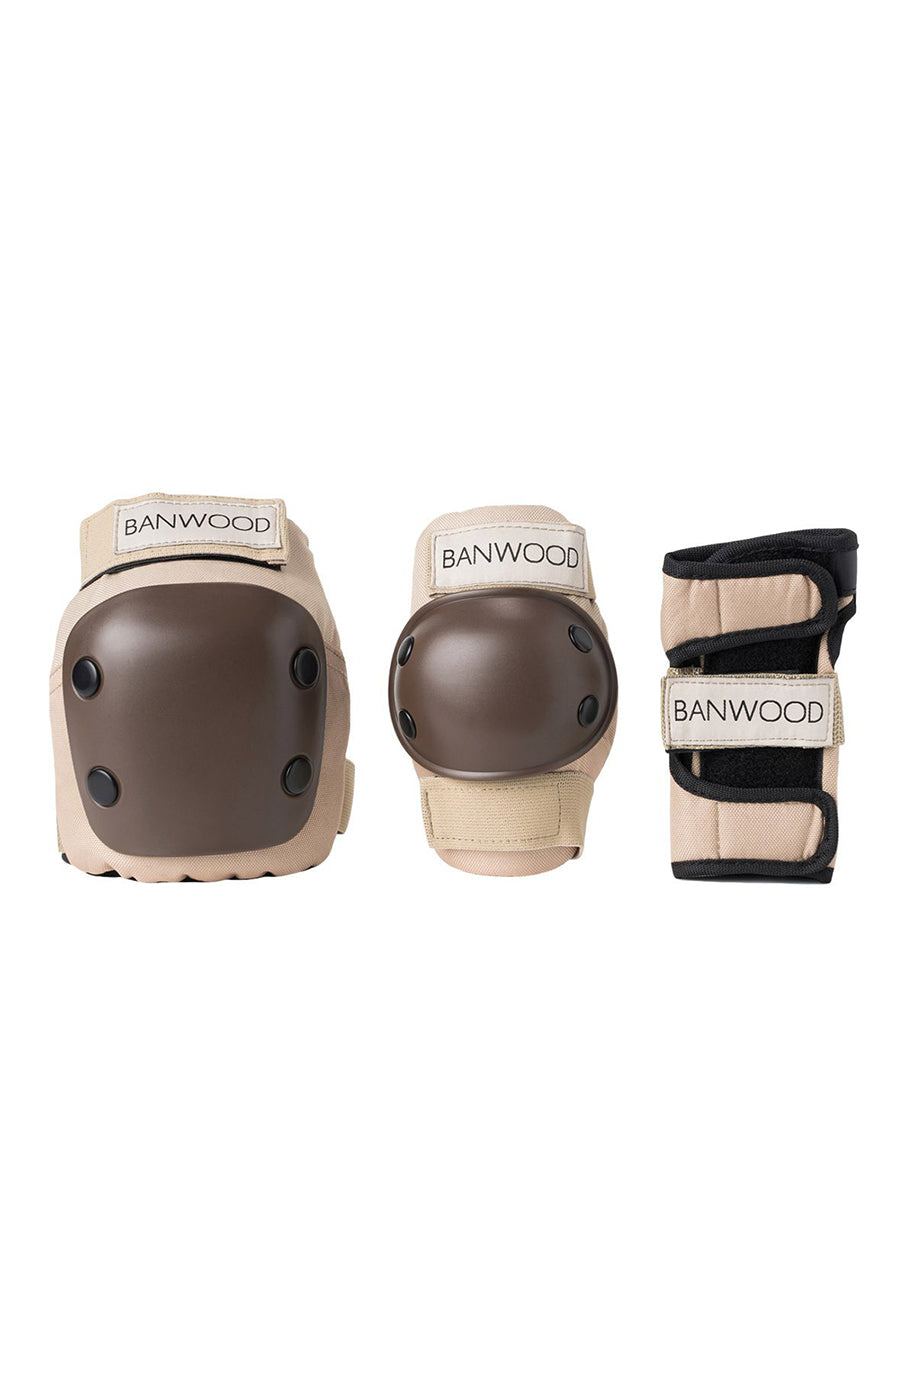 Banwood-Protection-Gear-BAISIK-1.jpg